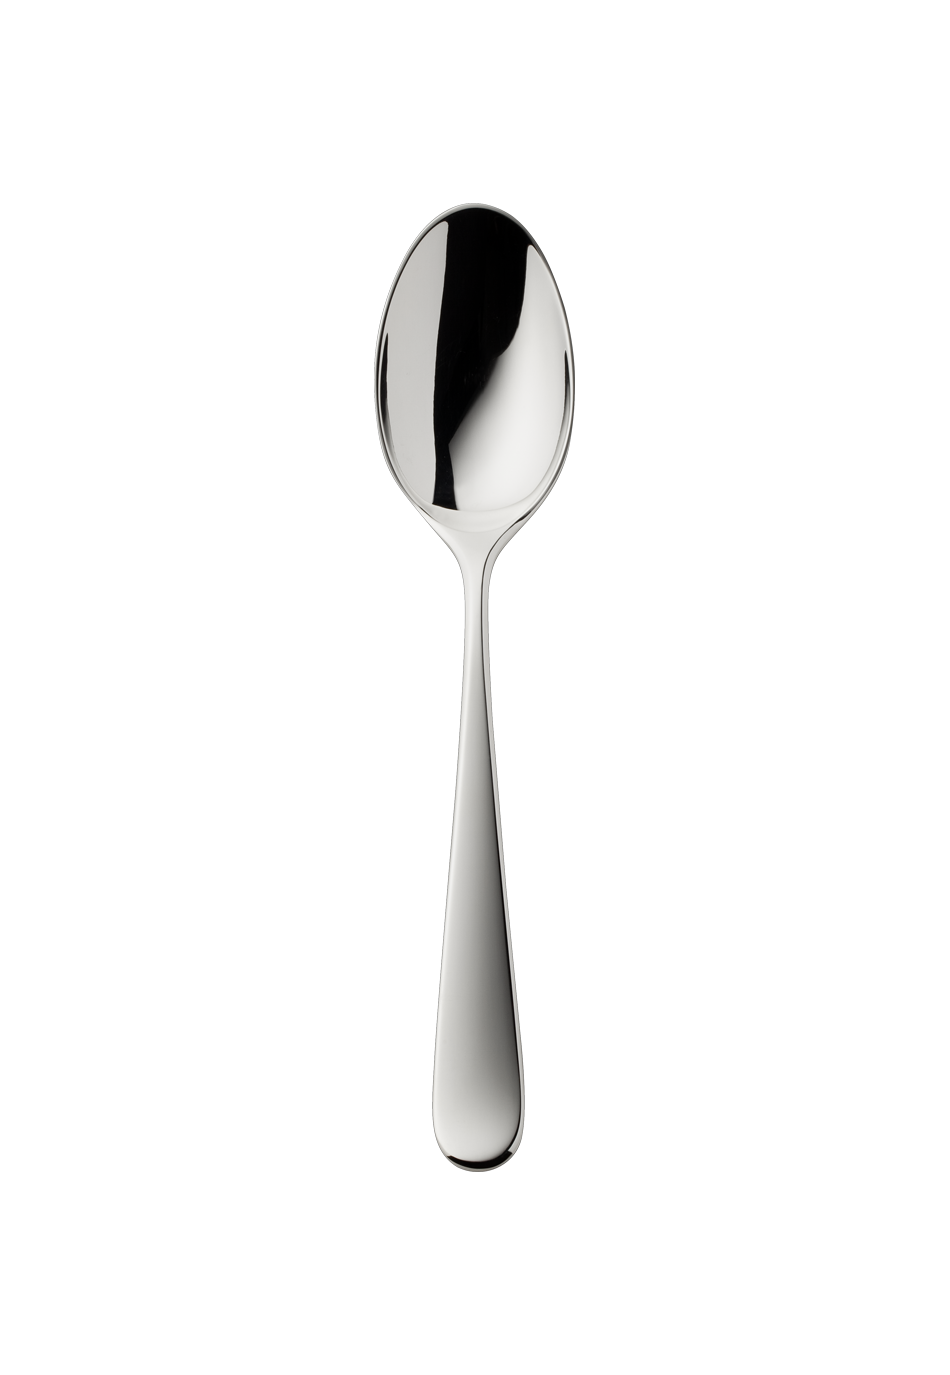 Dante Menu Spoon (150g massive silverplated)